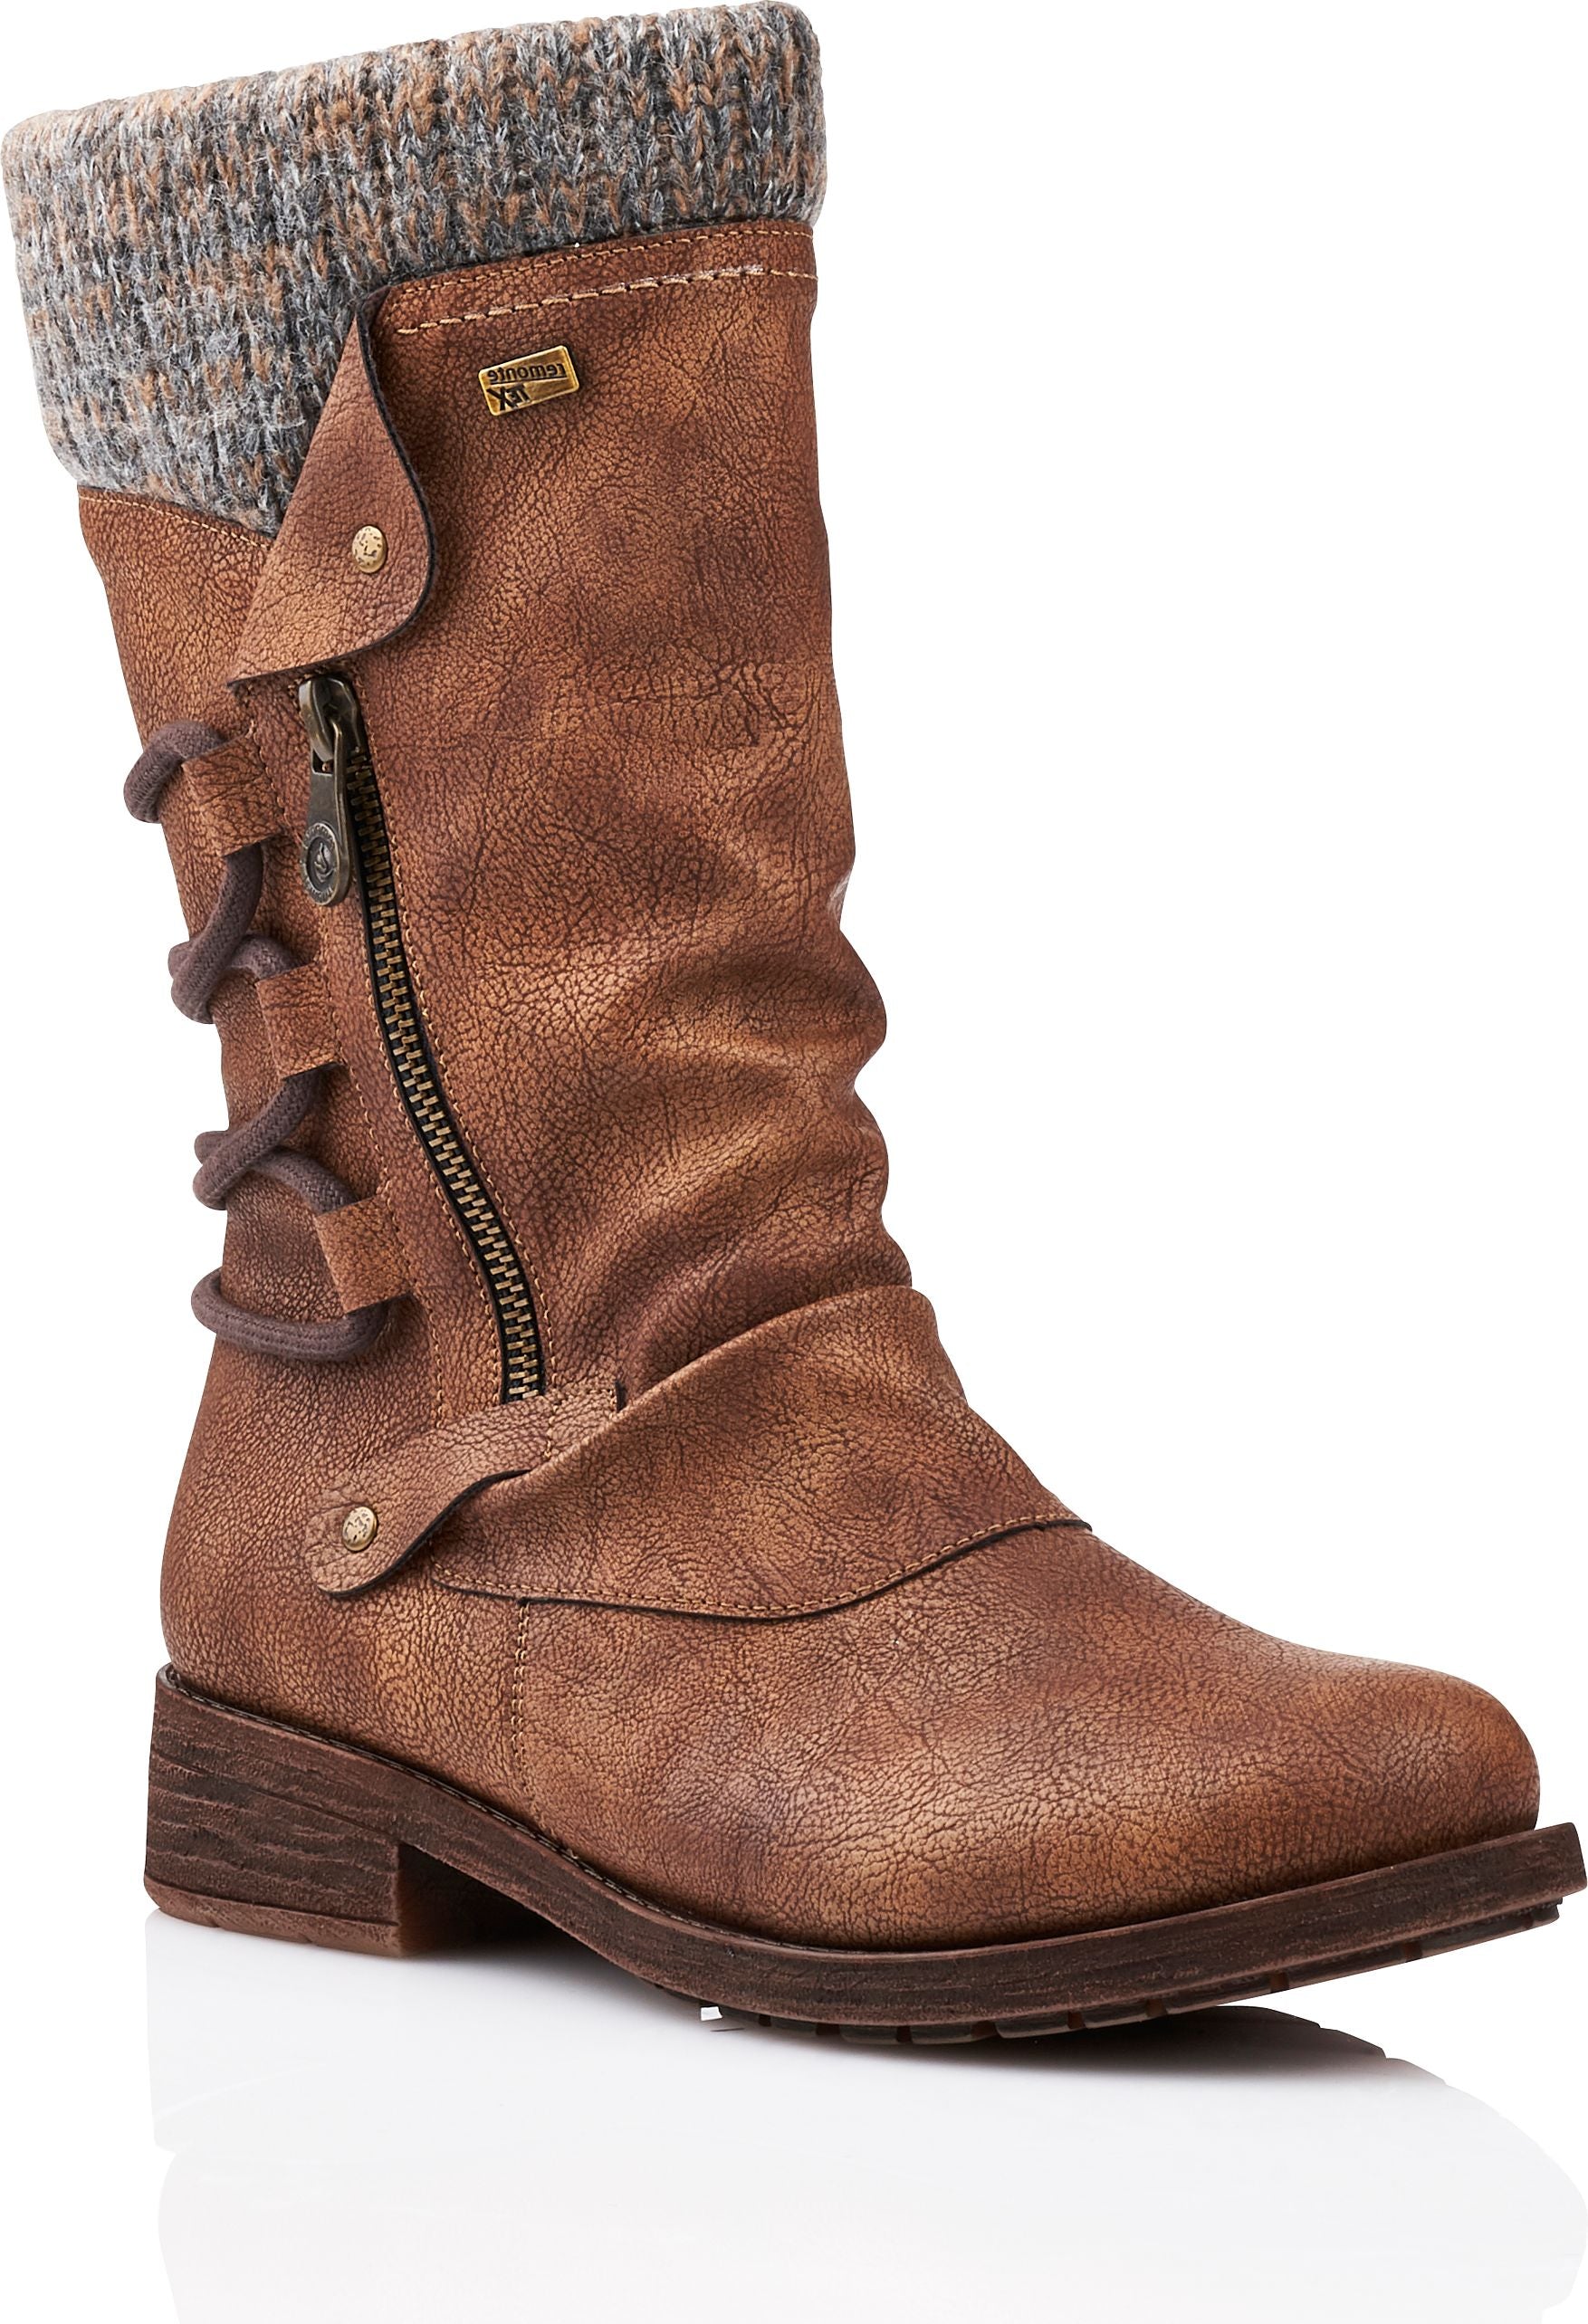 D8070-25 - Brown Tall Side Zip Boot